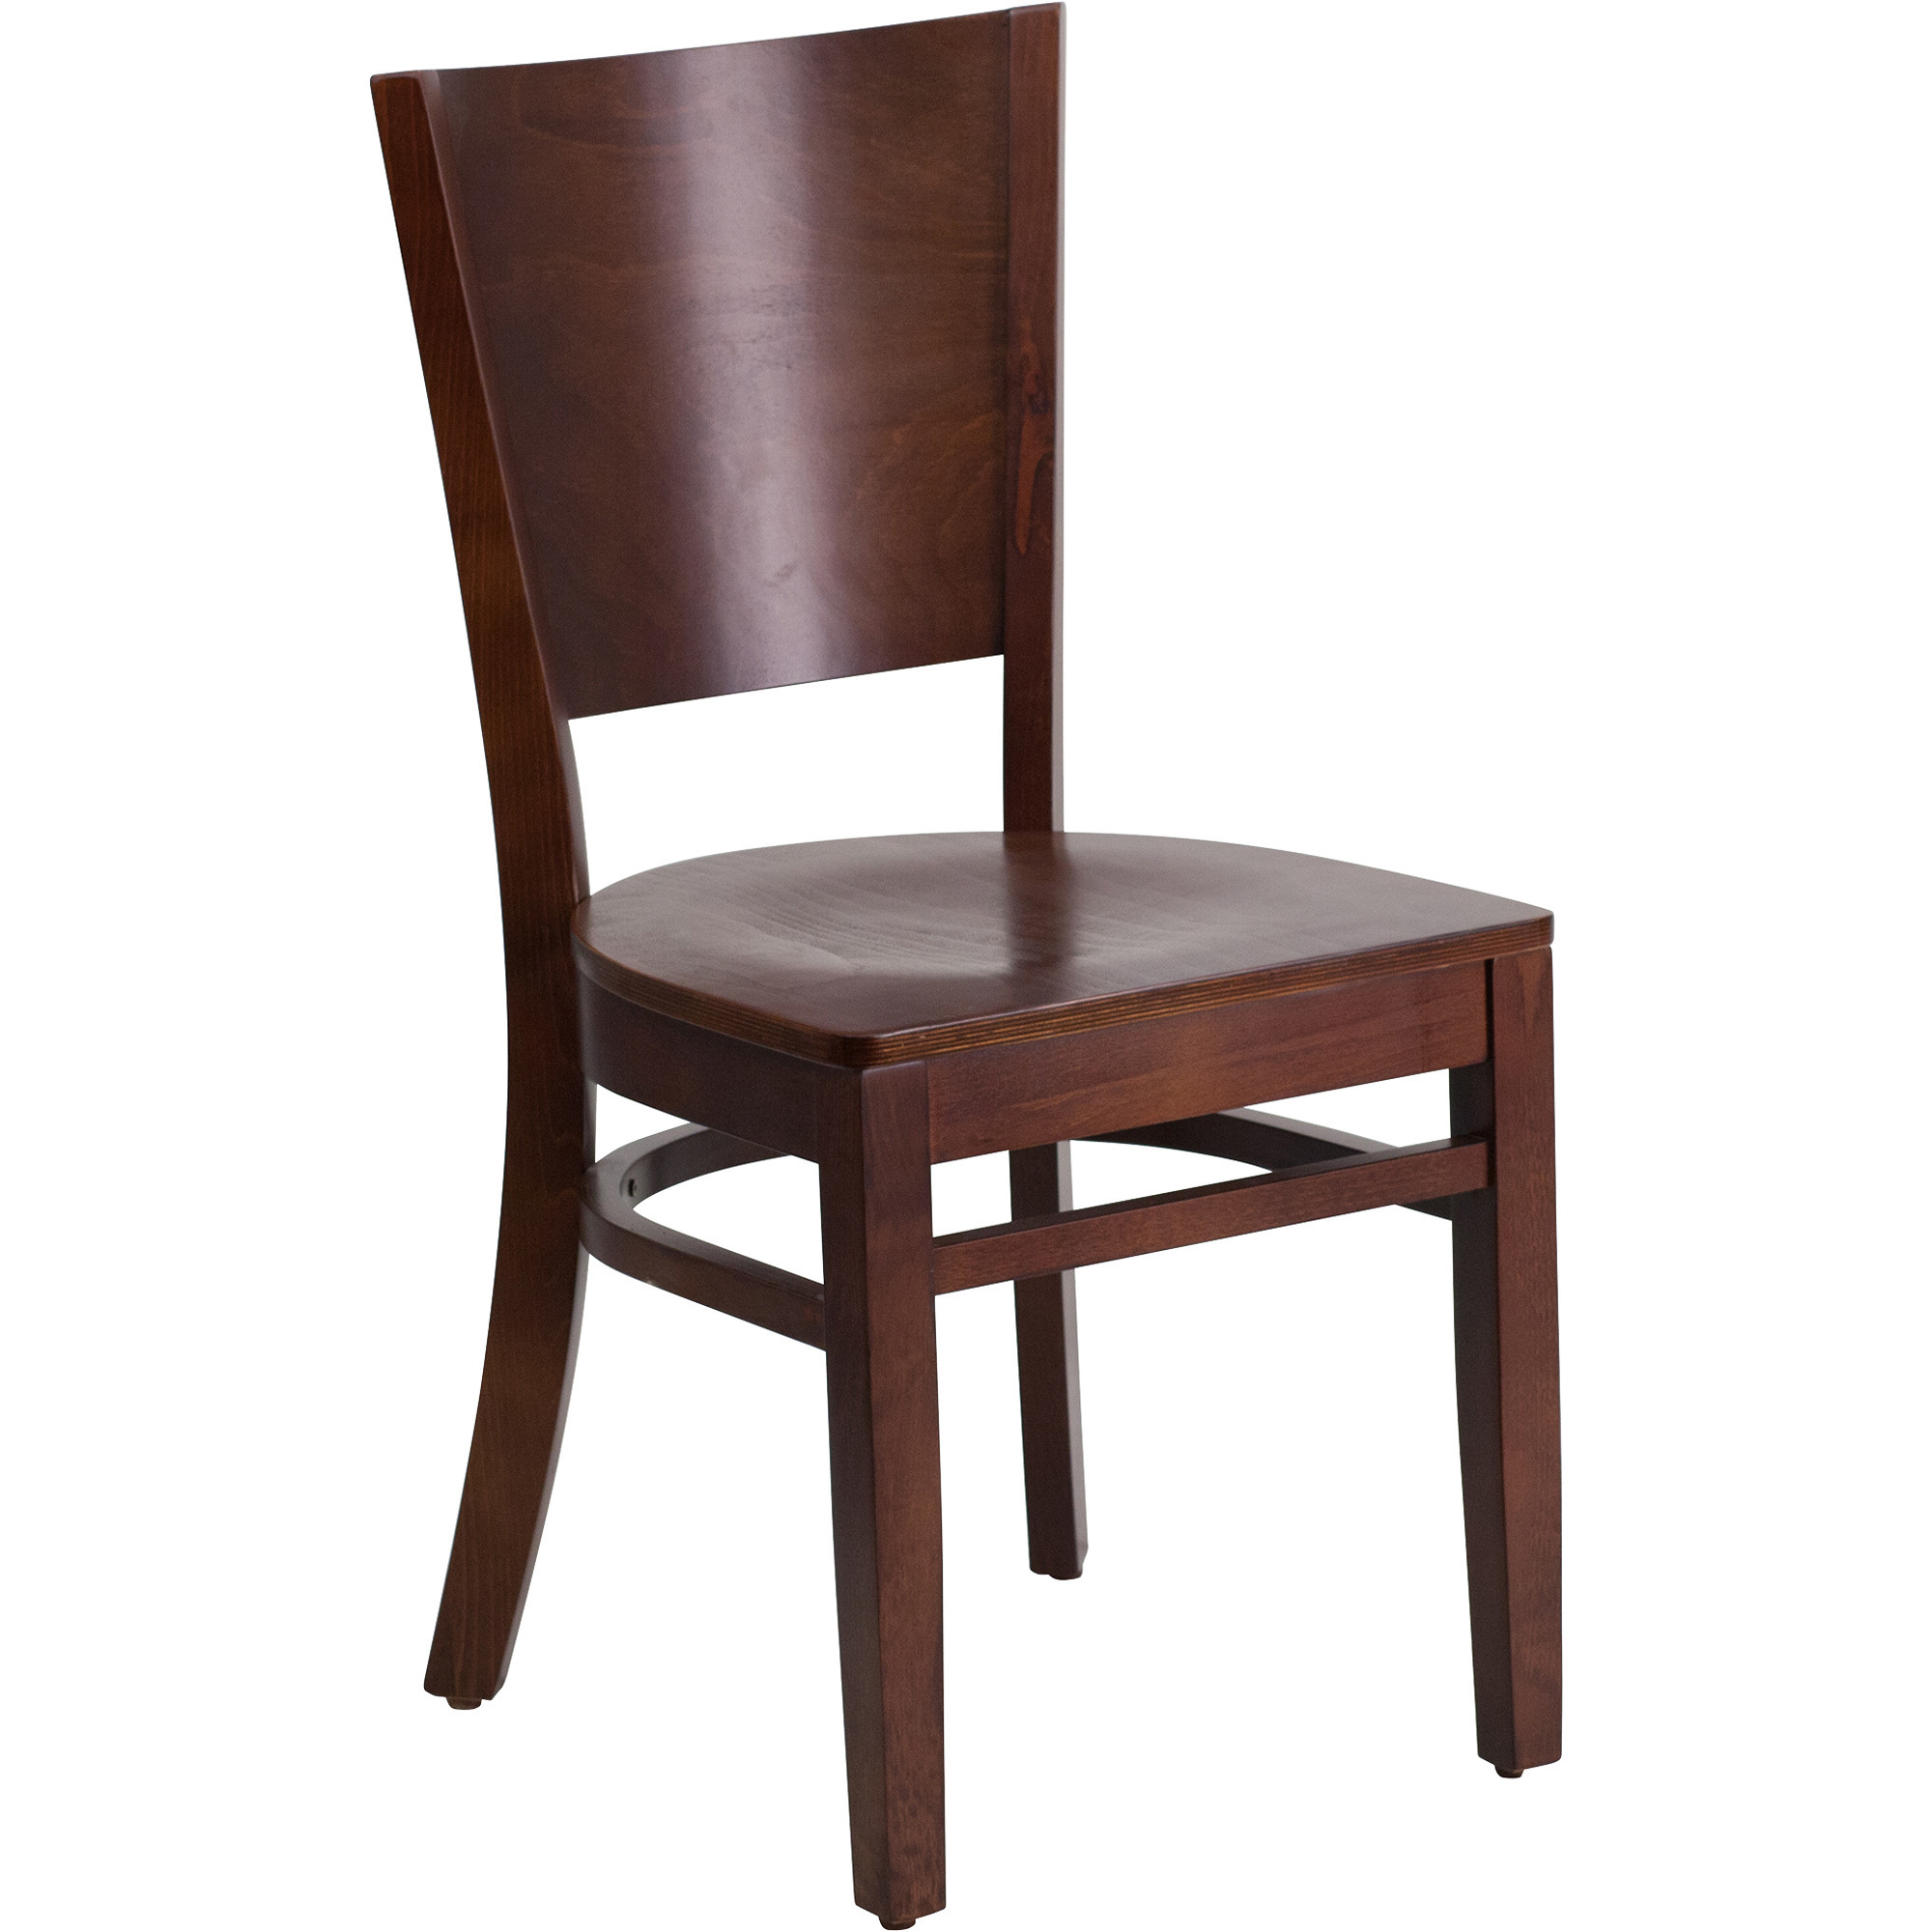 Wood Dining Chair — Walnut Finish, 800-Lb. Capacity, 17 1/4Inch W x 20 1/2Inch D x 33 1/2Inch H, Model - Flash Furniture XUDGW094WAL